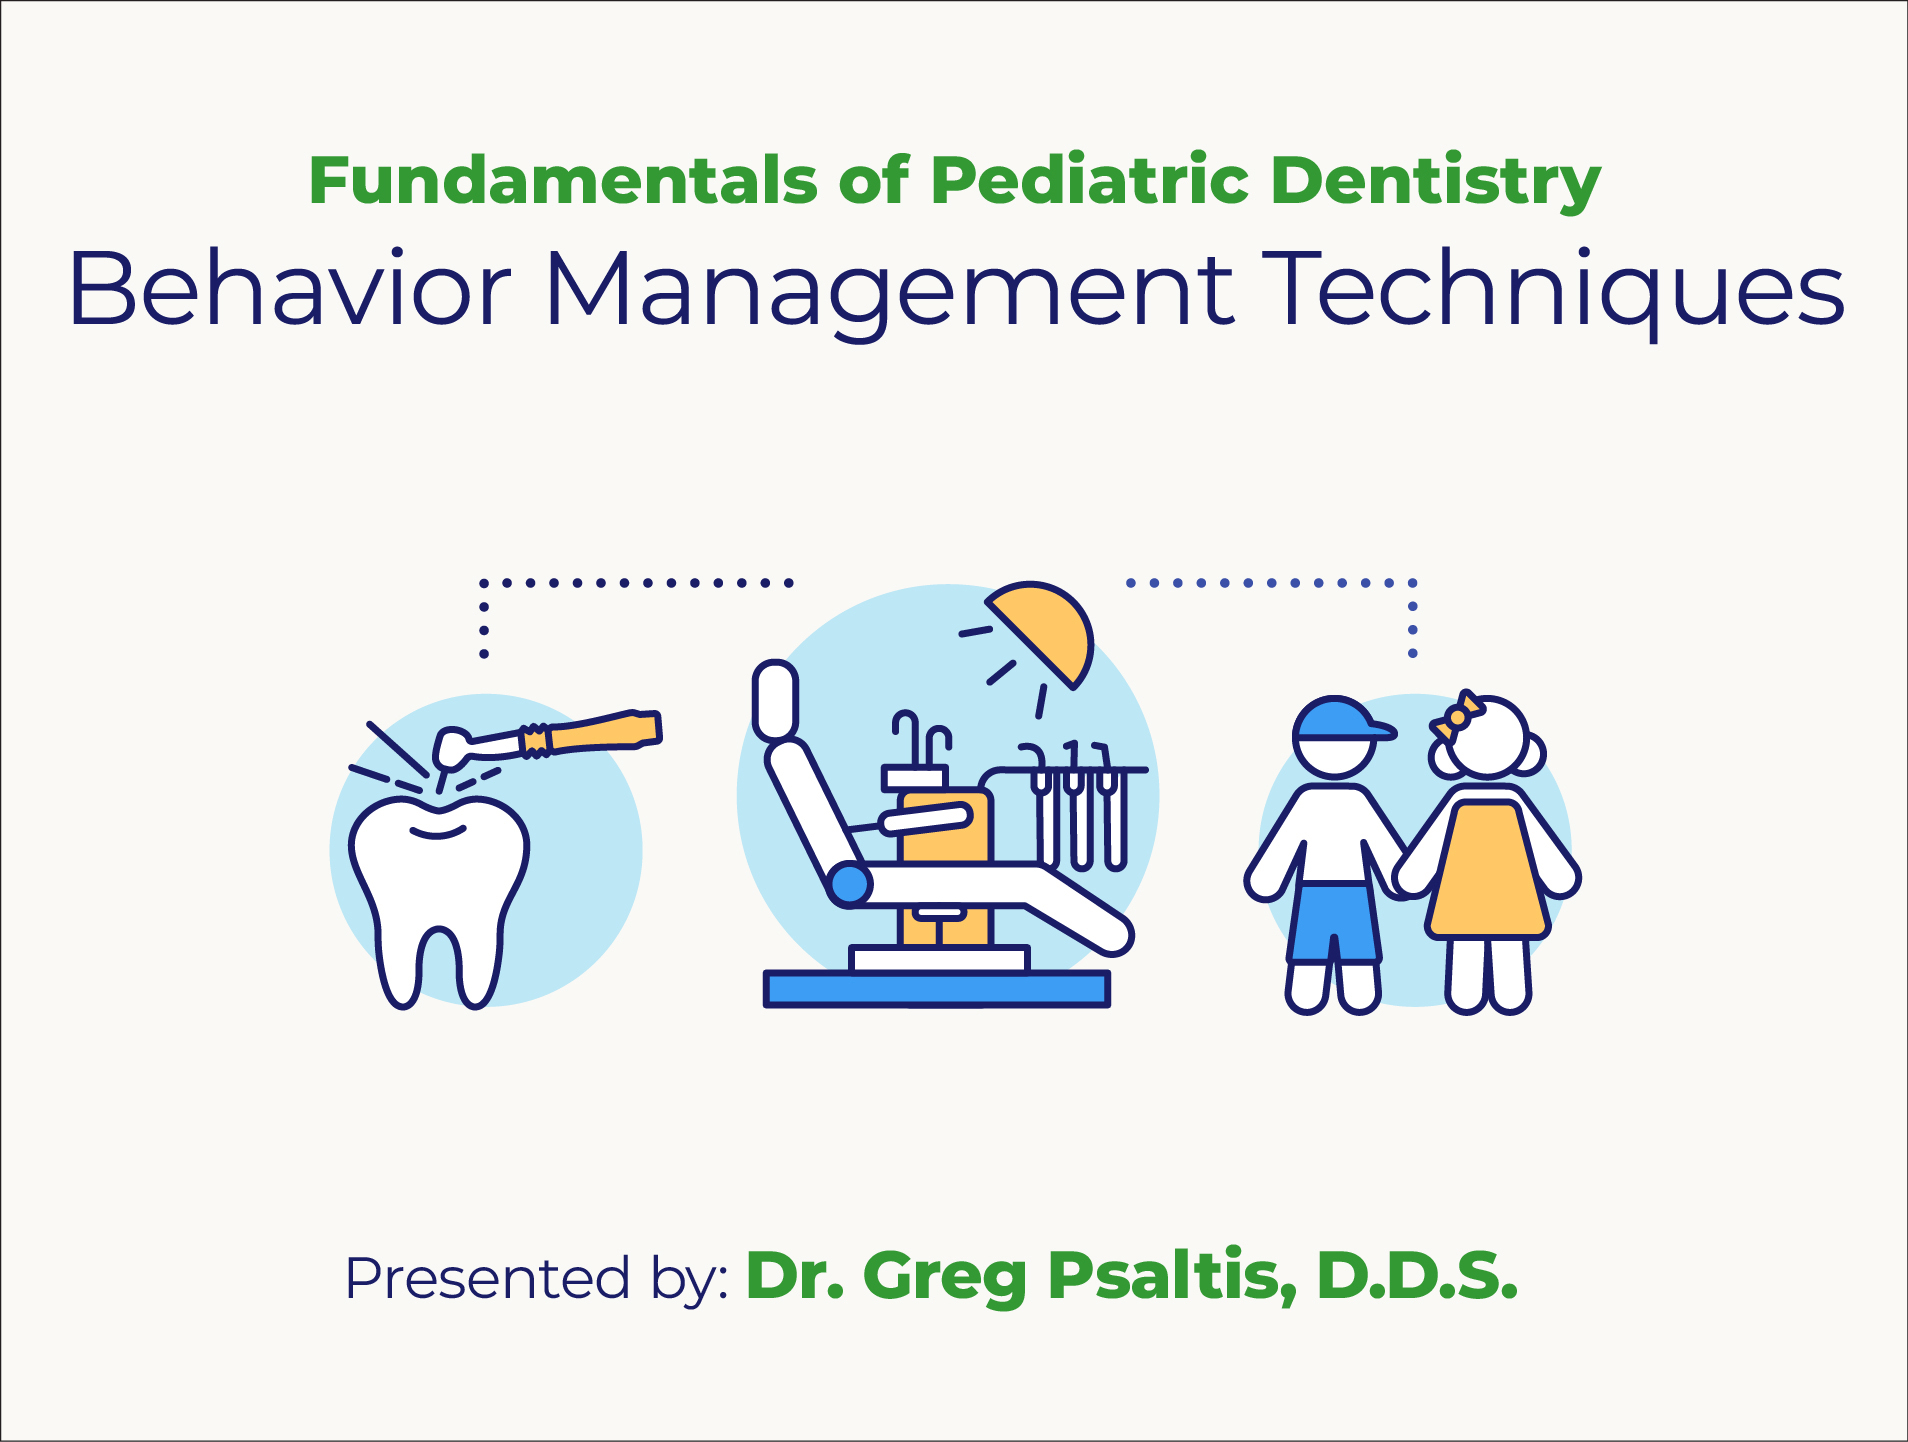 Fundamentals of Pediatric Dentistry: Behavior Management Techniques